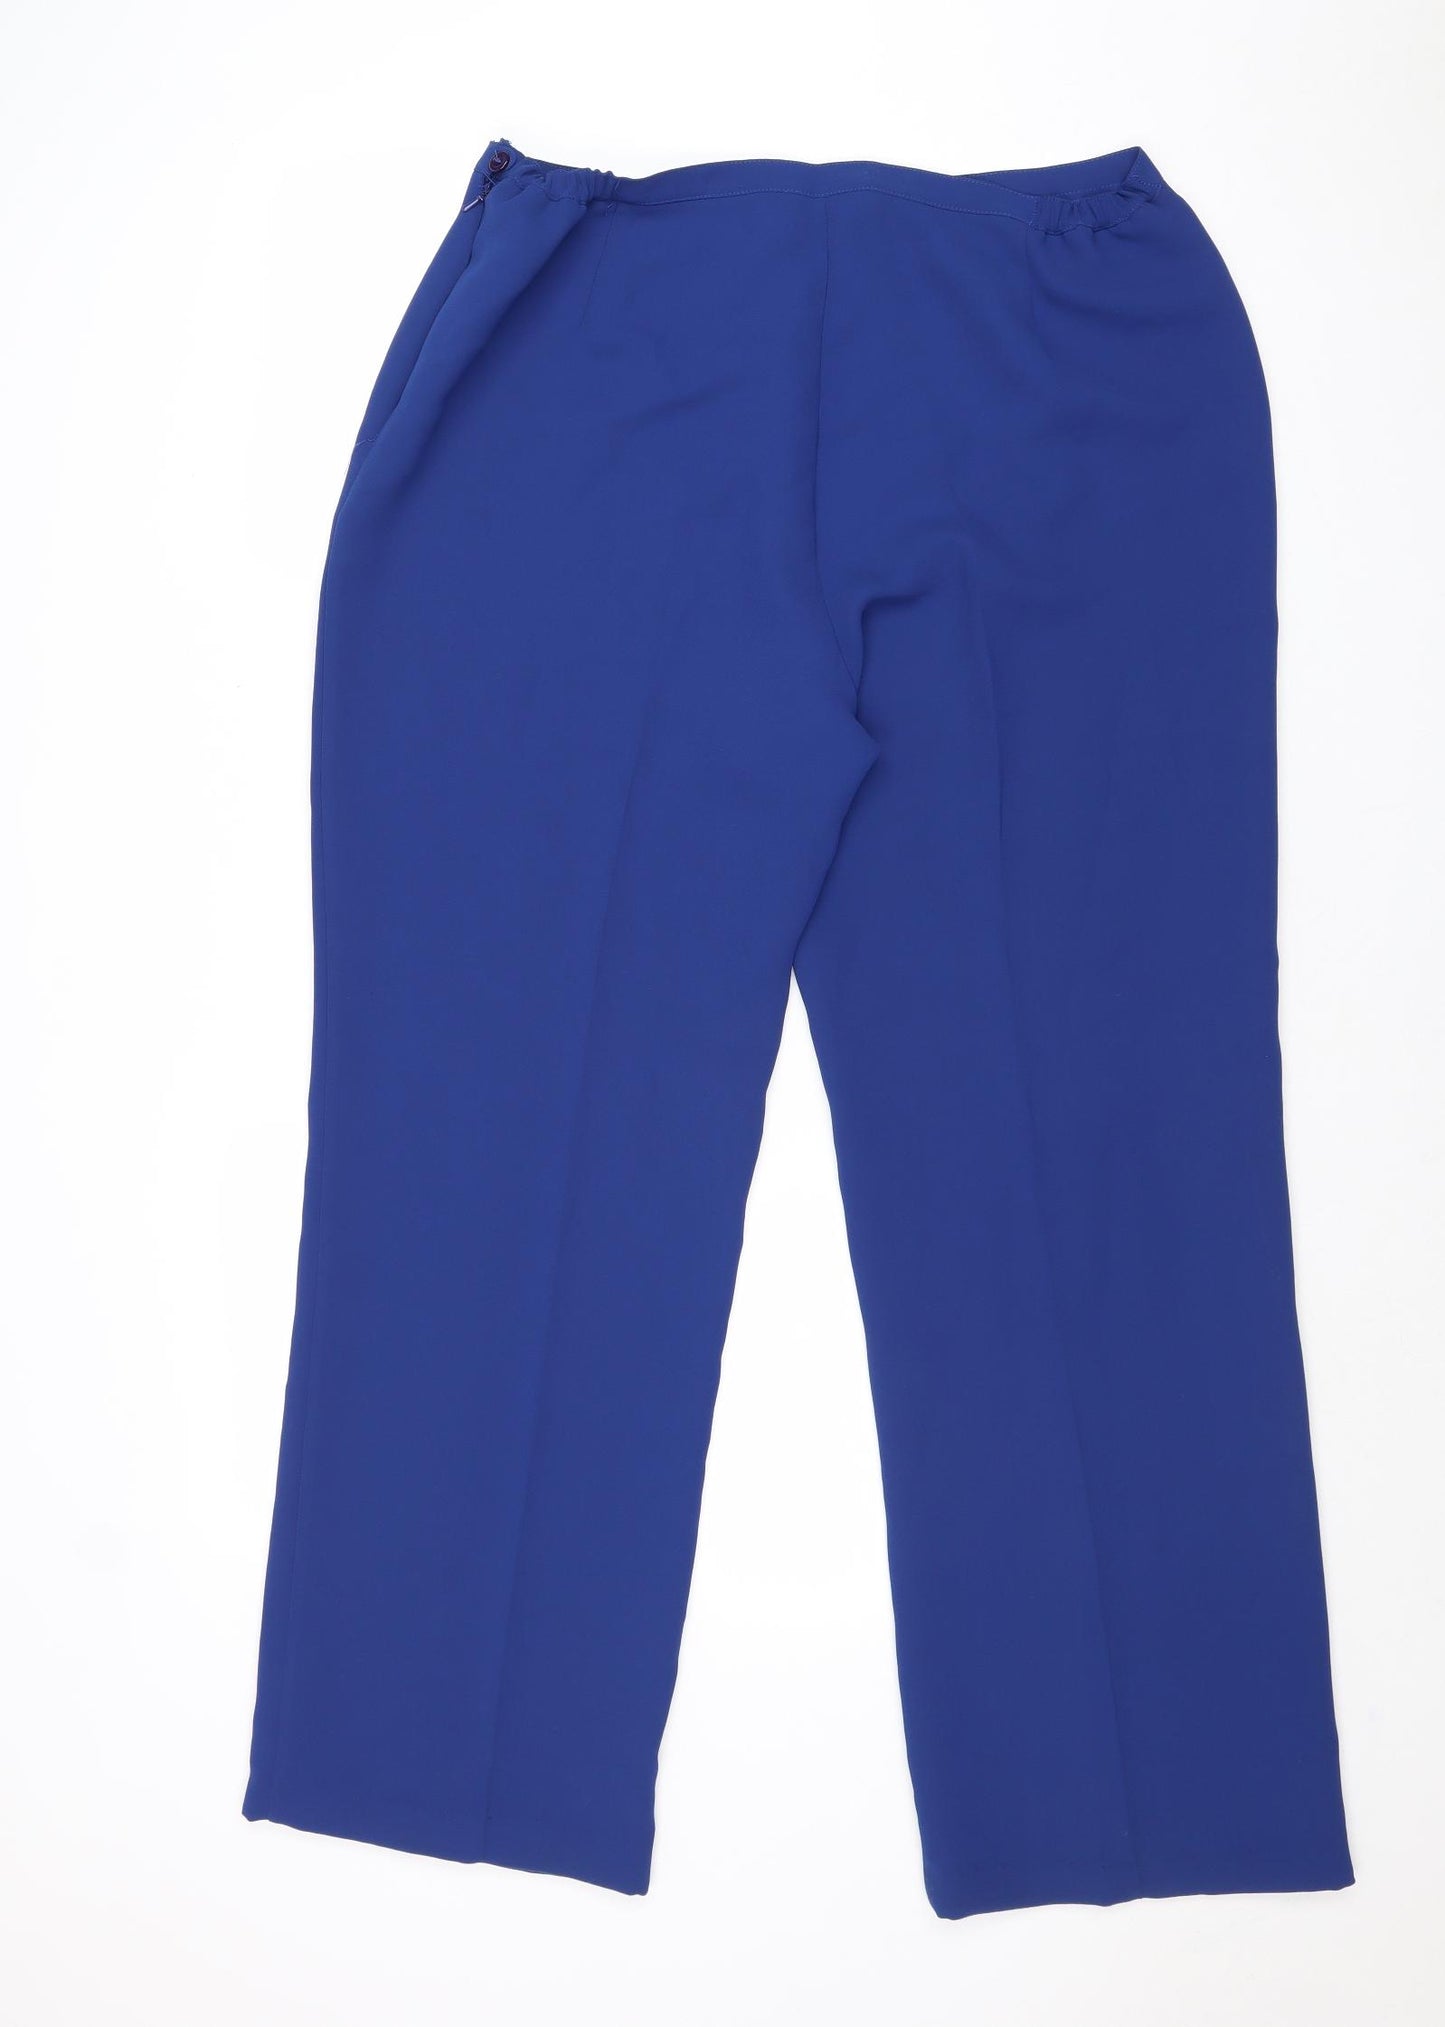 Michaela Louisa Womens Blue Polyester Trousers Size 34 in Regular Zip